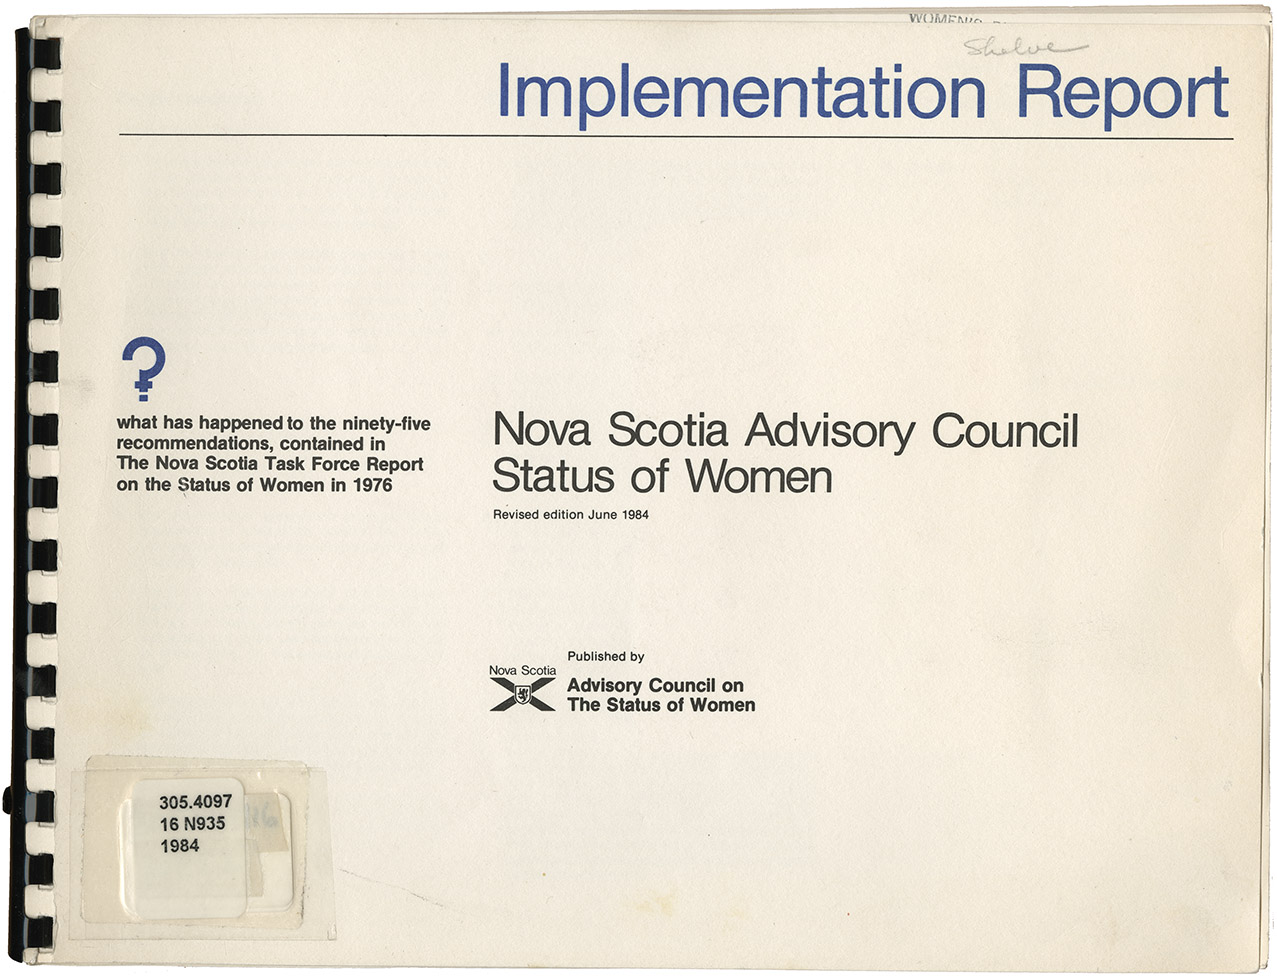 communityalbums - Status of Women Task Force Implementation Report